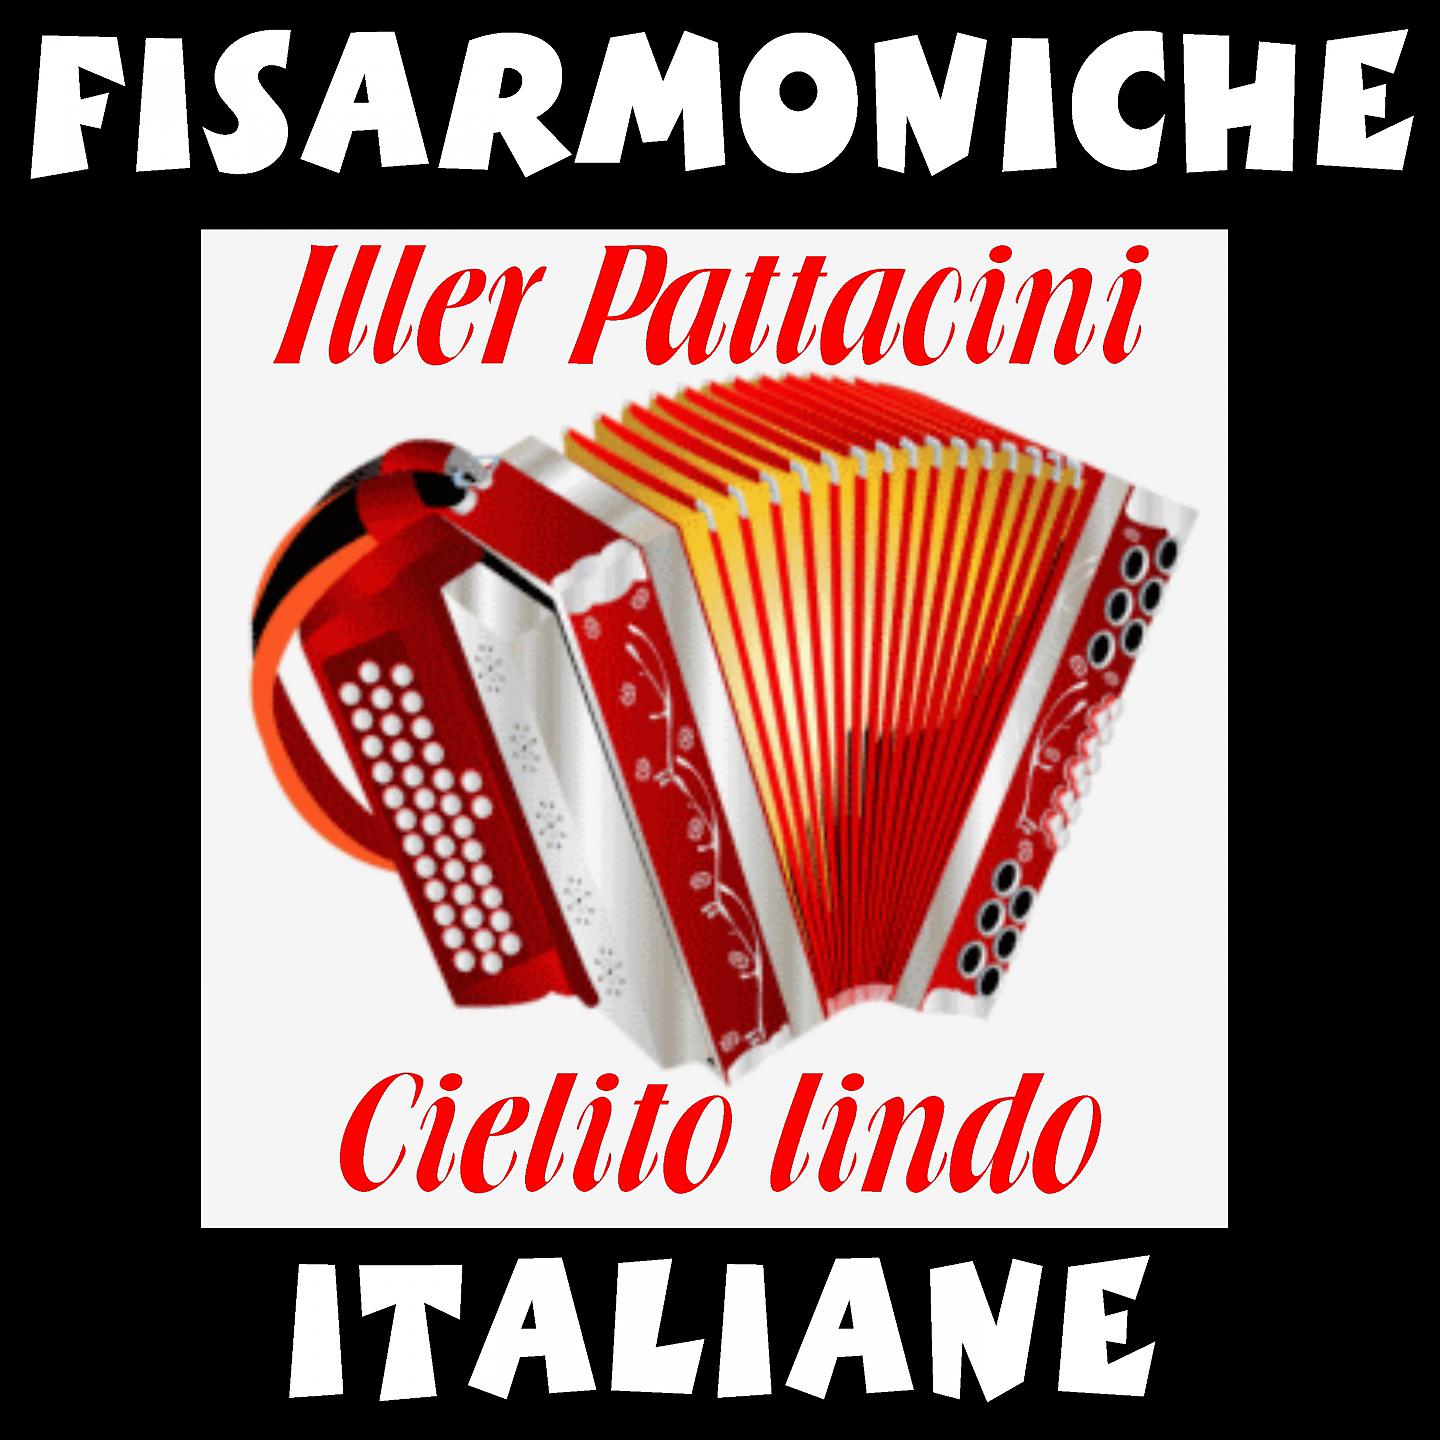 Постер альбома Fisarmoniche italiane - Iler Pattacini: Cielito lindo